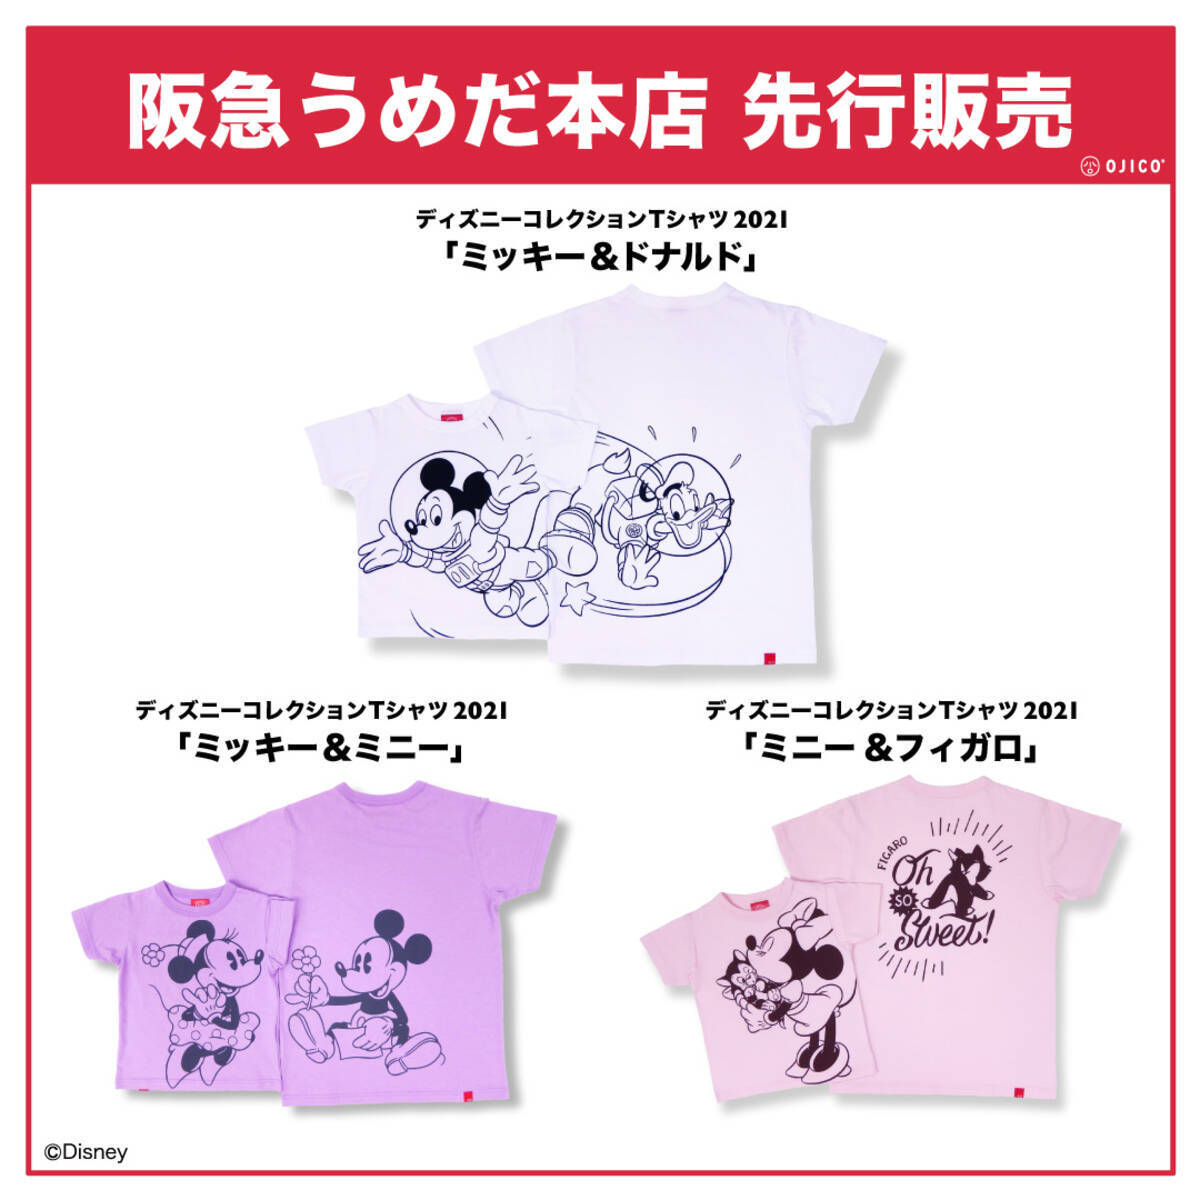 Ojico からディズニーコレクションtシャツが登場 21年4月21日 エキサイトニュース